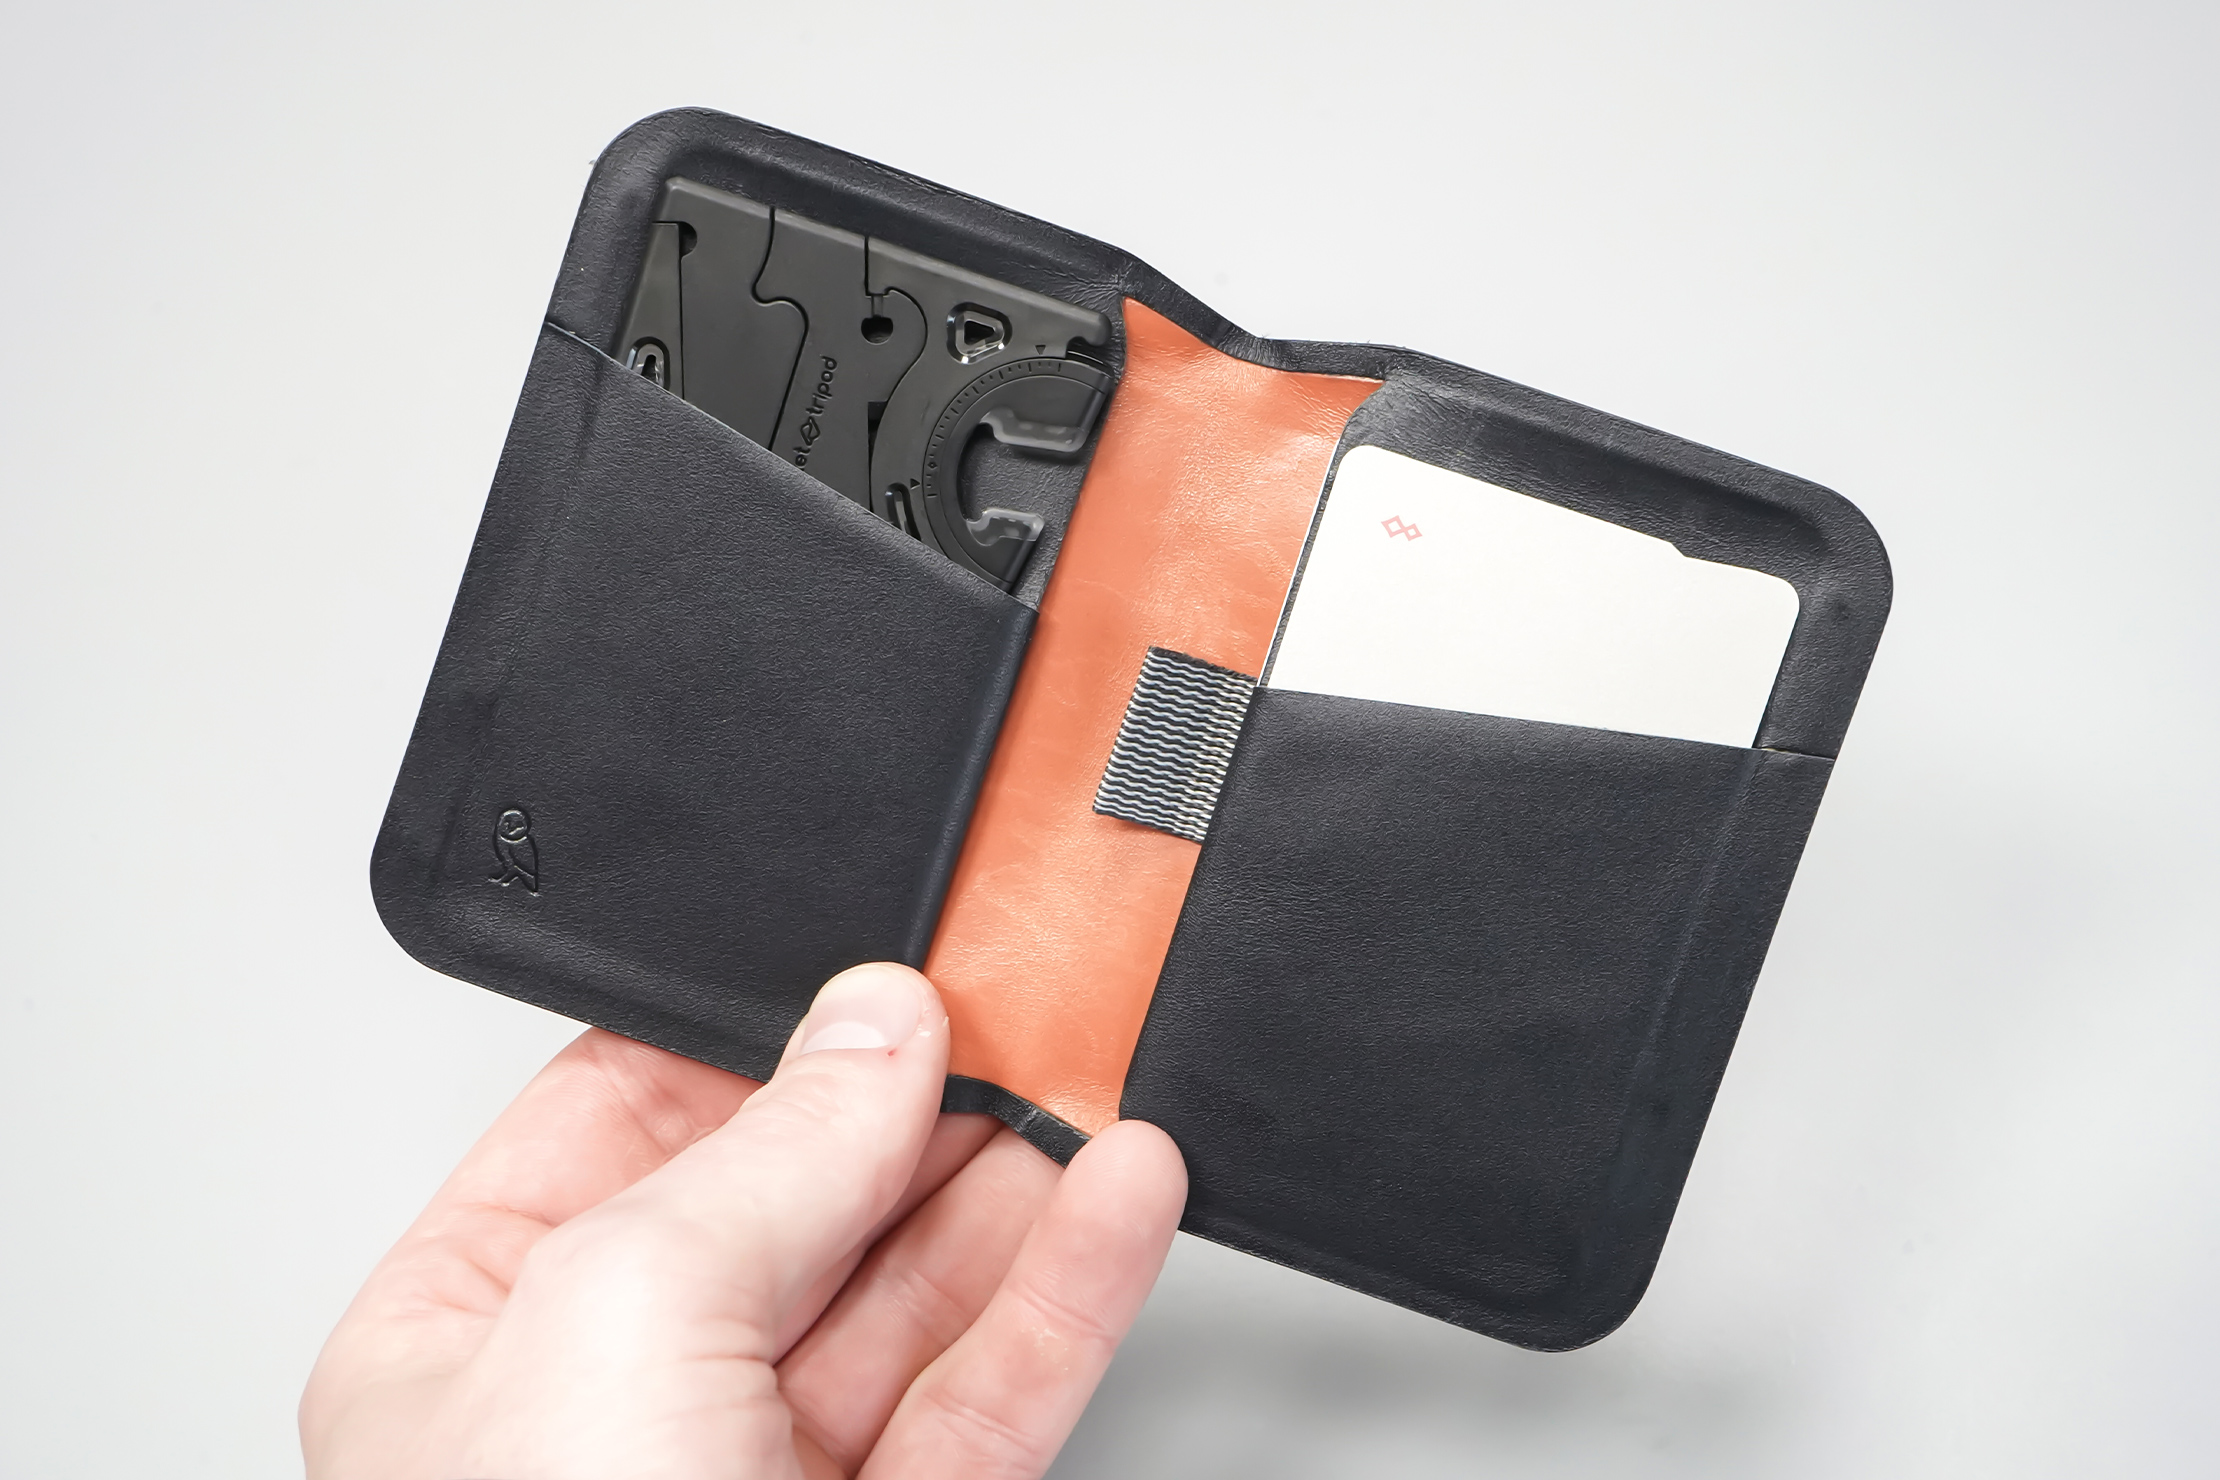 Geometrical Pocket Tripod Pro | The tripod in a wallet